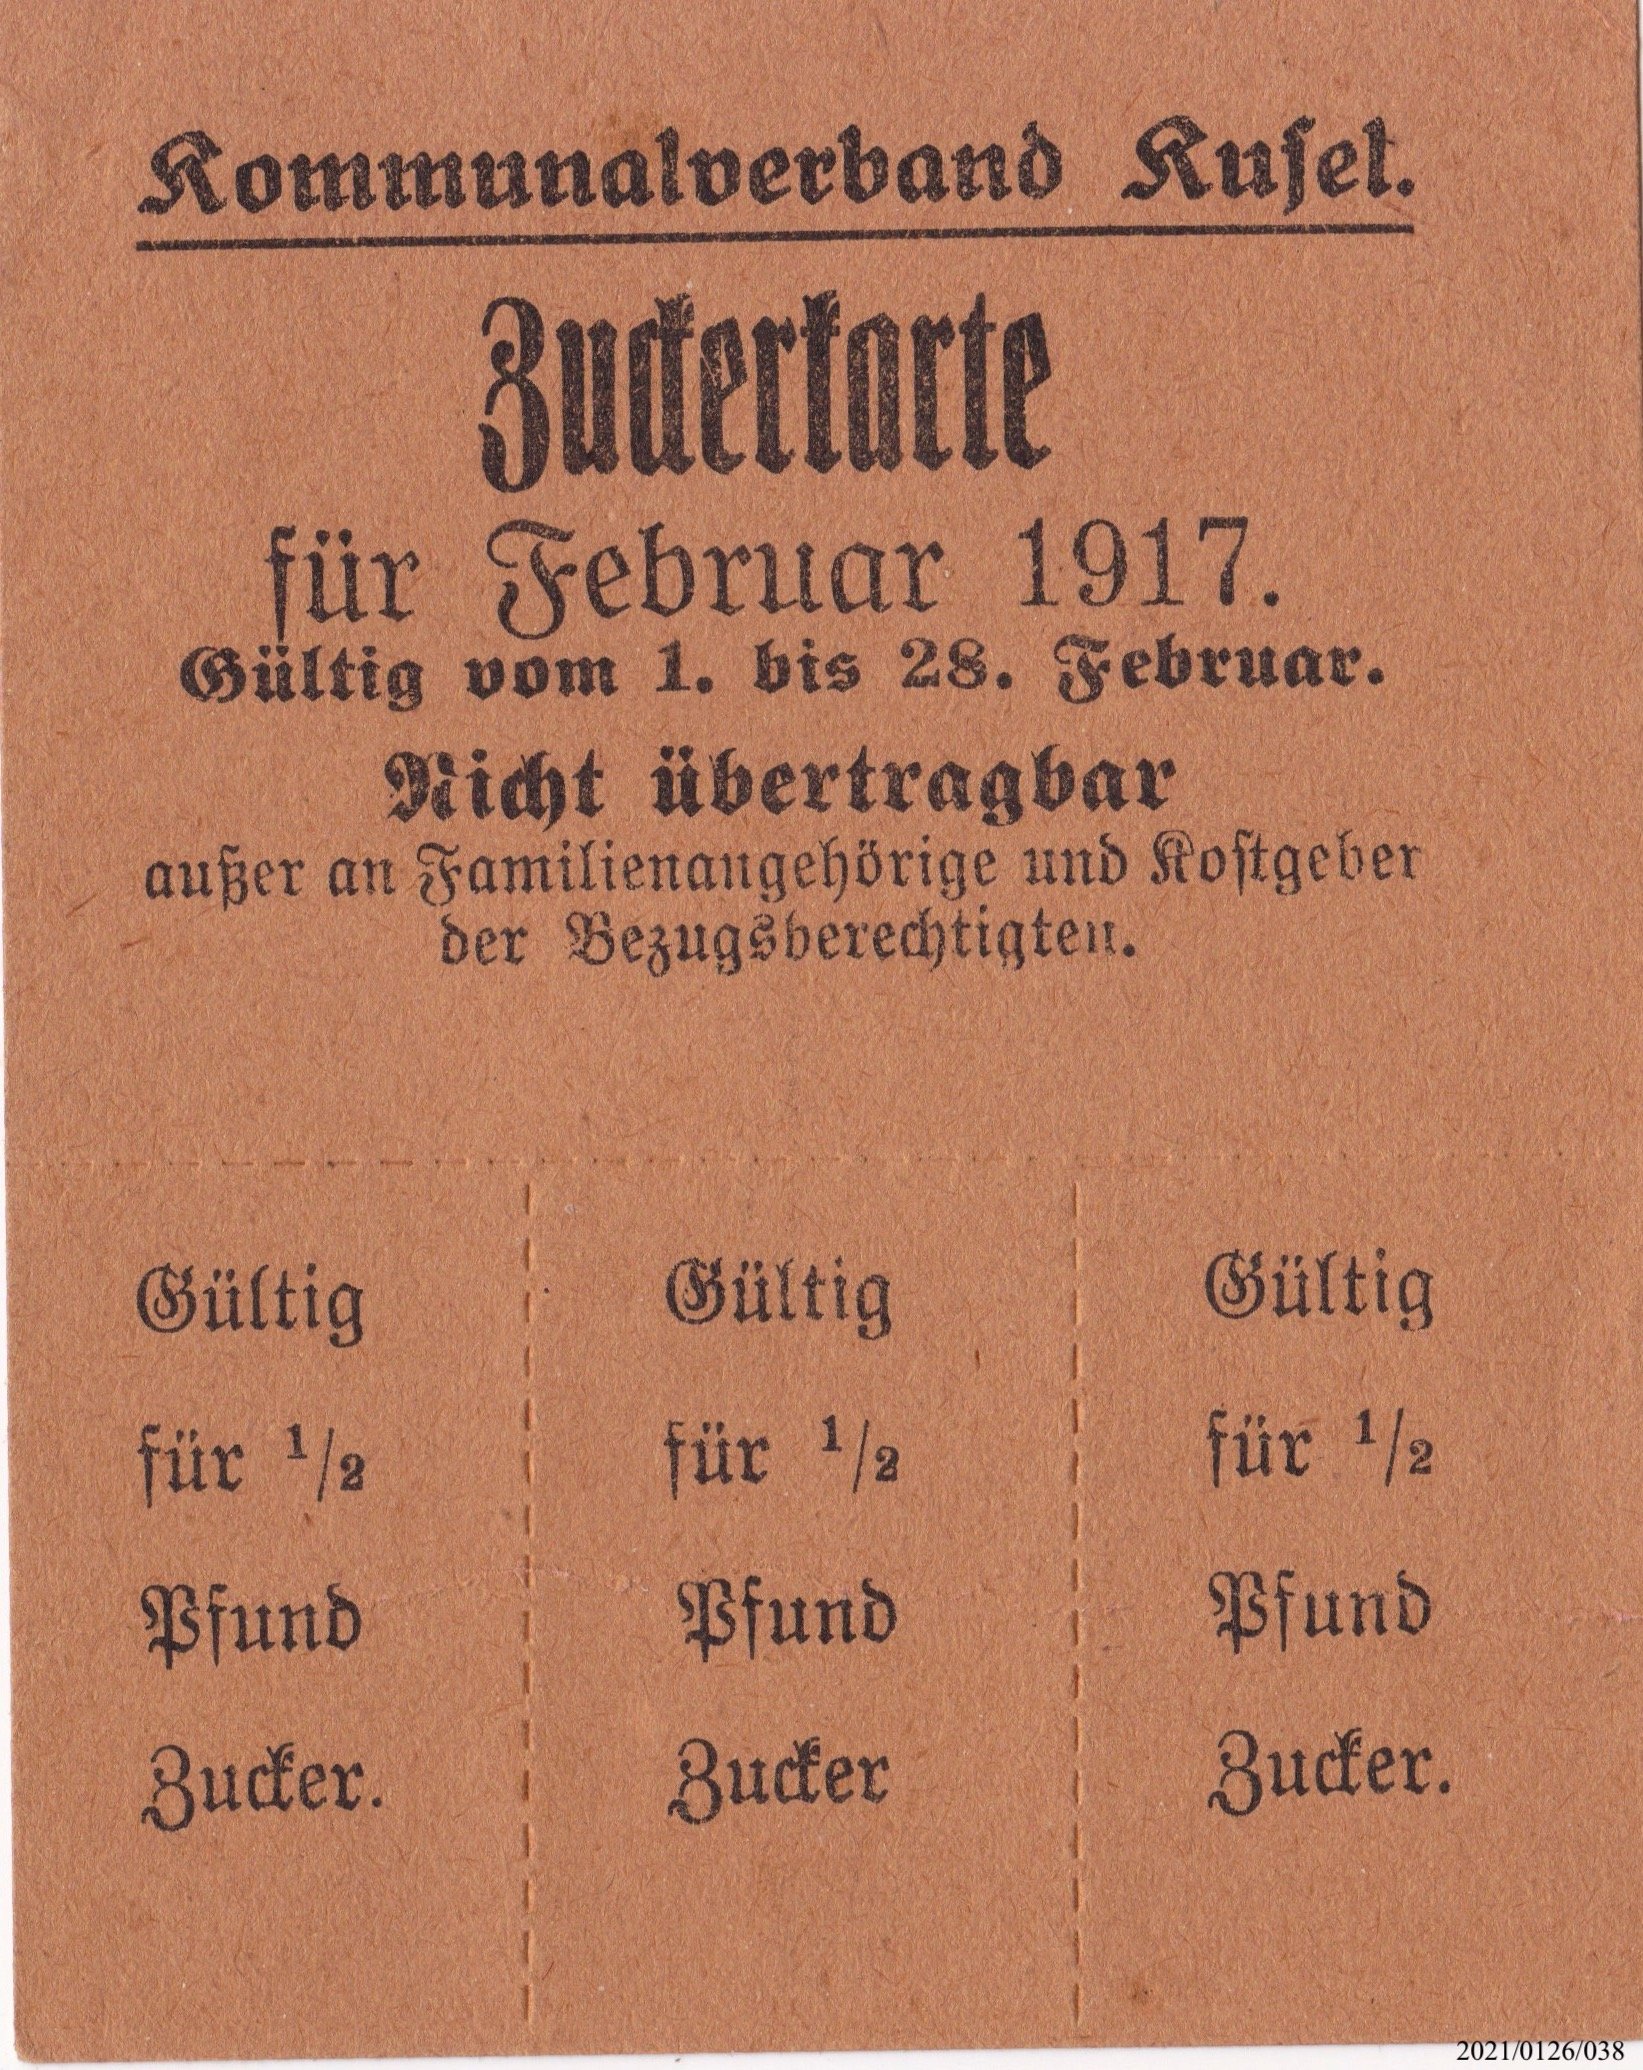 Zuckerkarte Kommunalverband Kusel Februar 1917 (Museumsgesellschaft Bad Dürkheim e. V. CC BY-NC-SA)